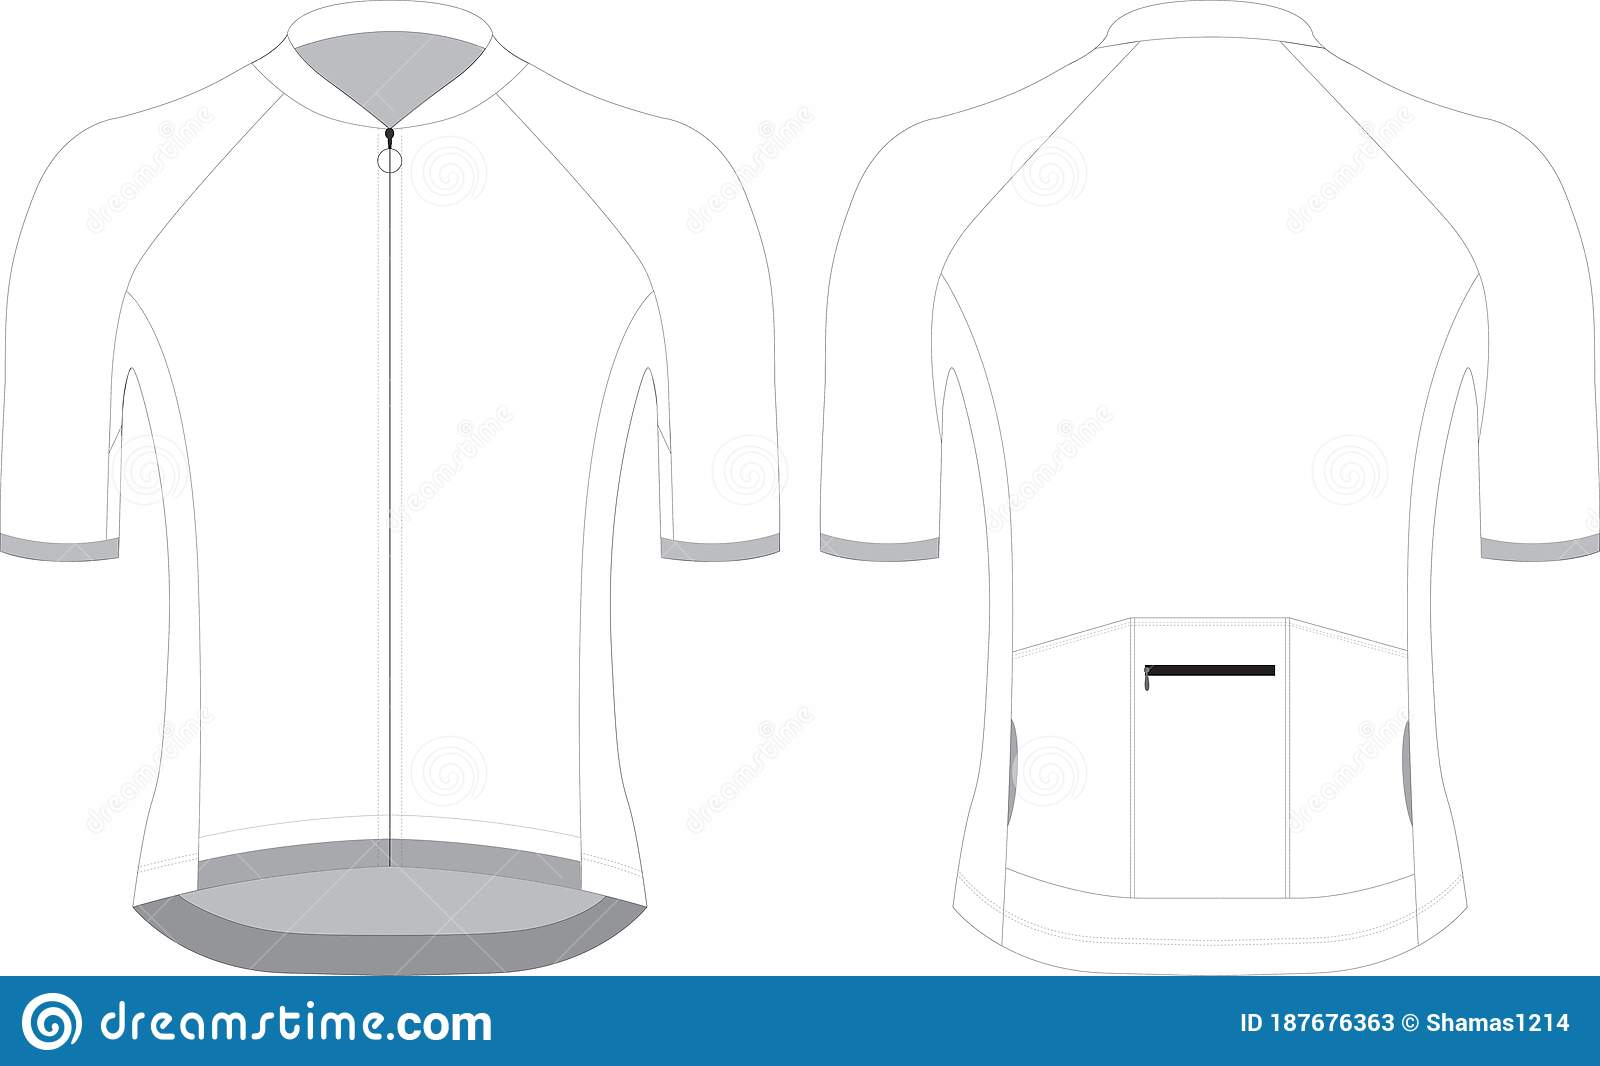 Studio Lerne dich kennen Präferenz cycling jersey design template  Inside Blank Cycling Jersey Template